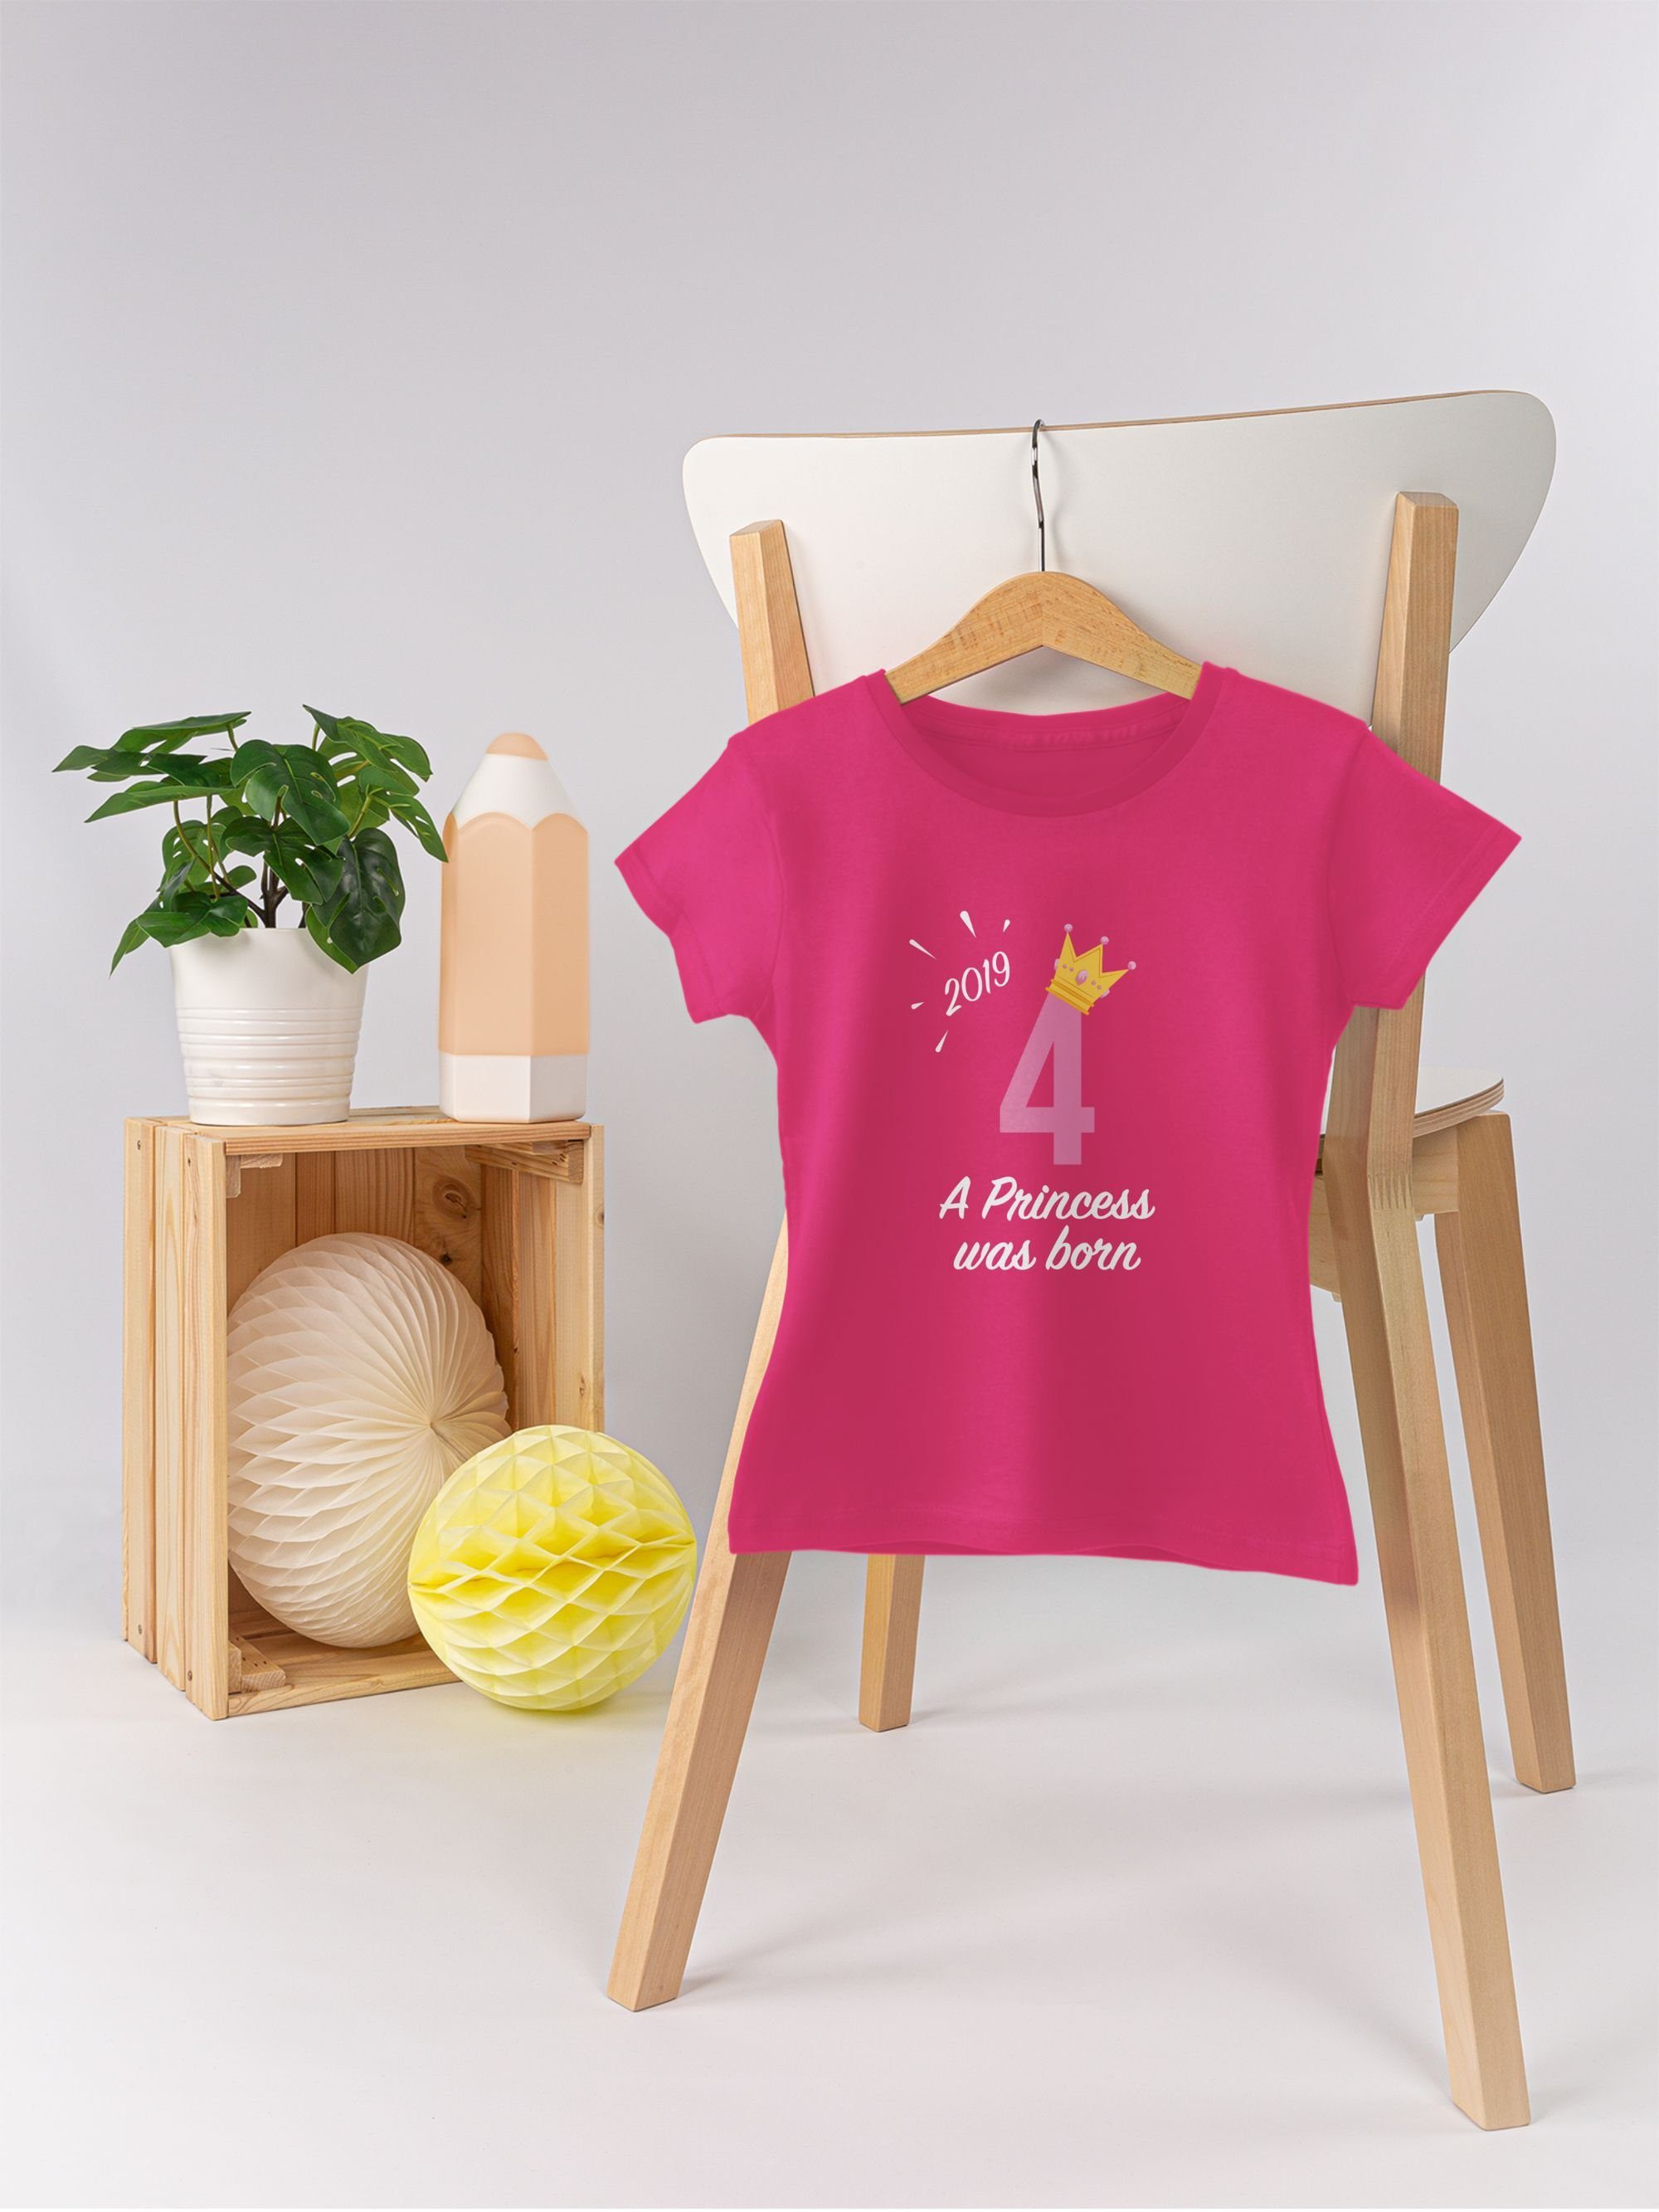 Mädchen 4. Vierter 2019 Princess Shirtracer Fuchsia Geburtstag T-Shirt 1